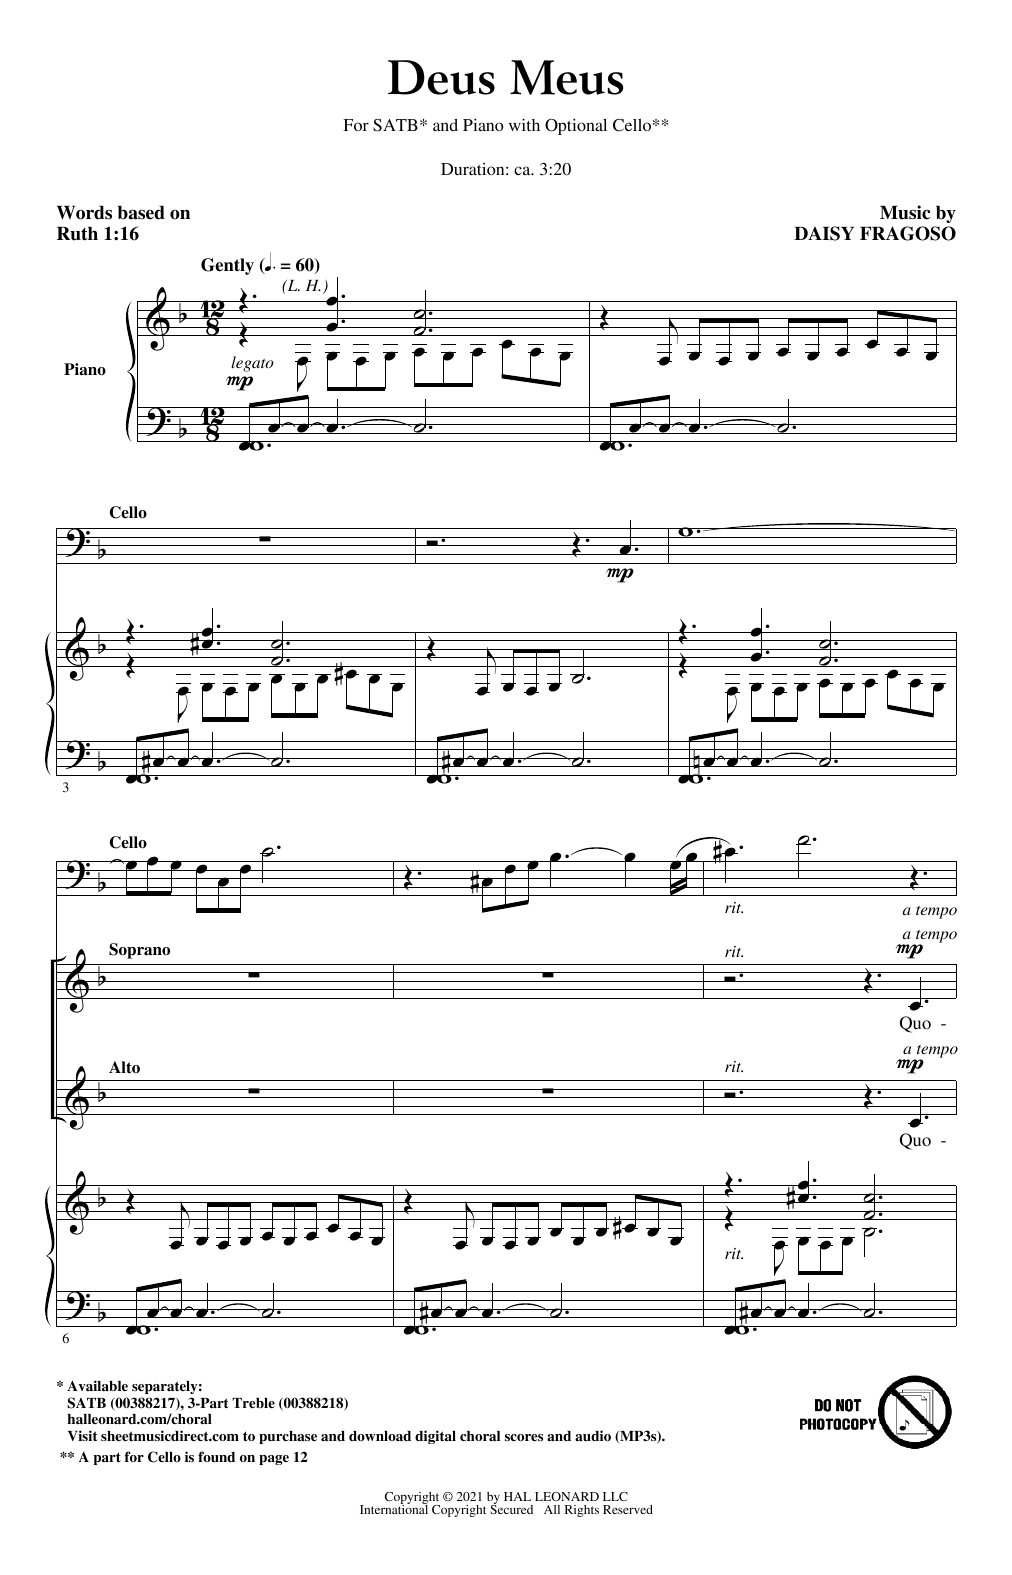 Deus Meus (SATB Choir) von Daisy Fragoso